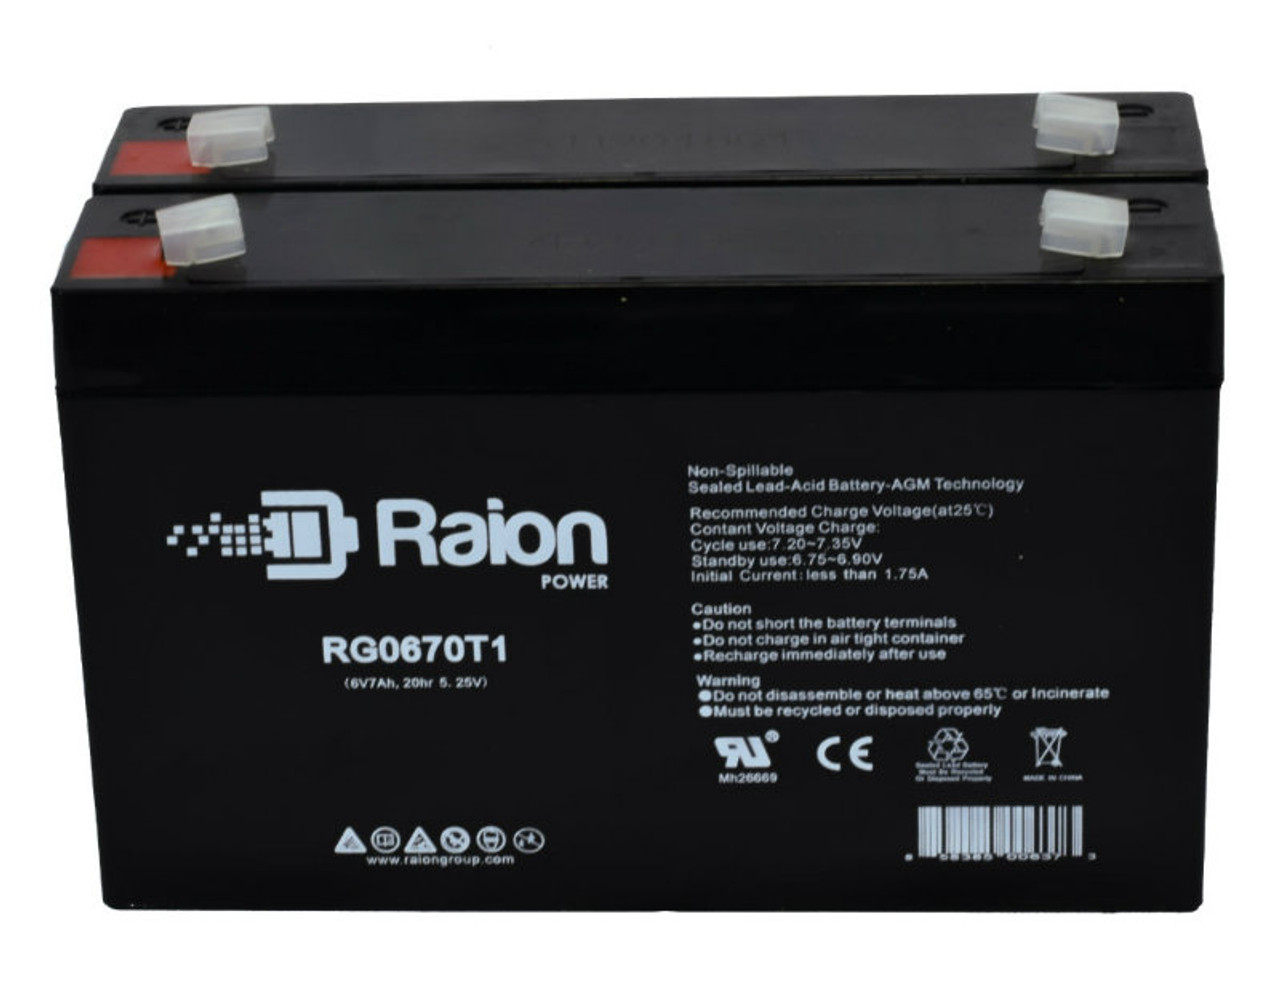 Raion Power RG0670T1 6V 7Ah Replacement Emergency Light Battery for Dual-Lite CVT3RW3 - 2 Pack